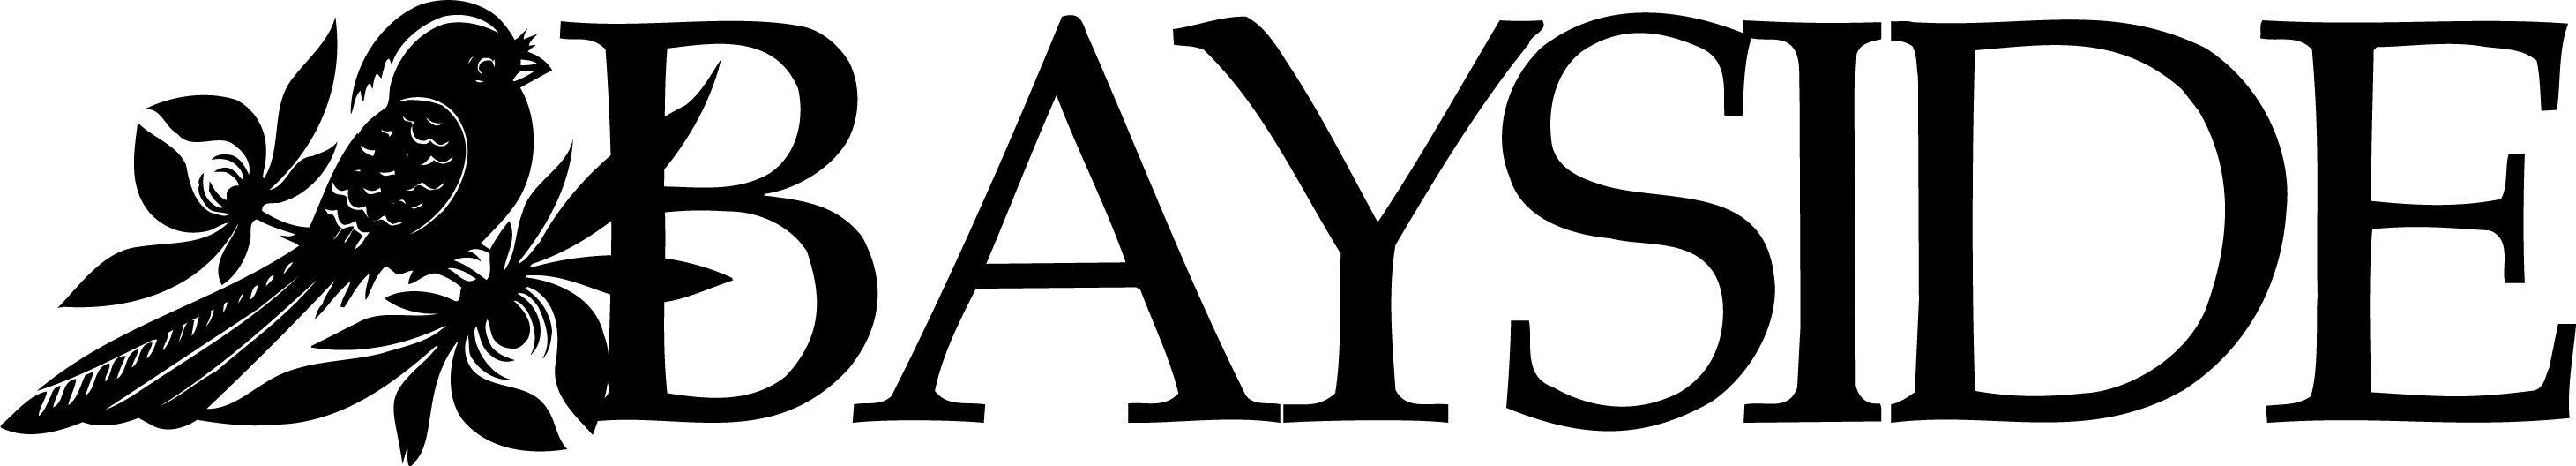 Bayside Logo - Bayside Logos